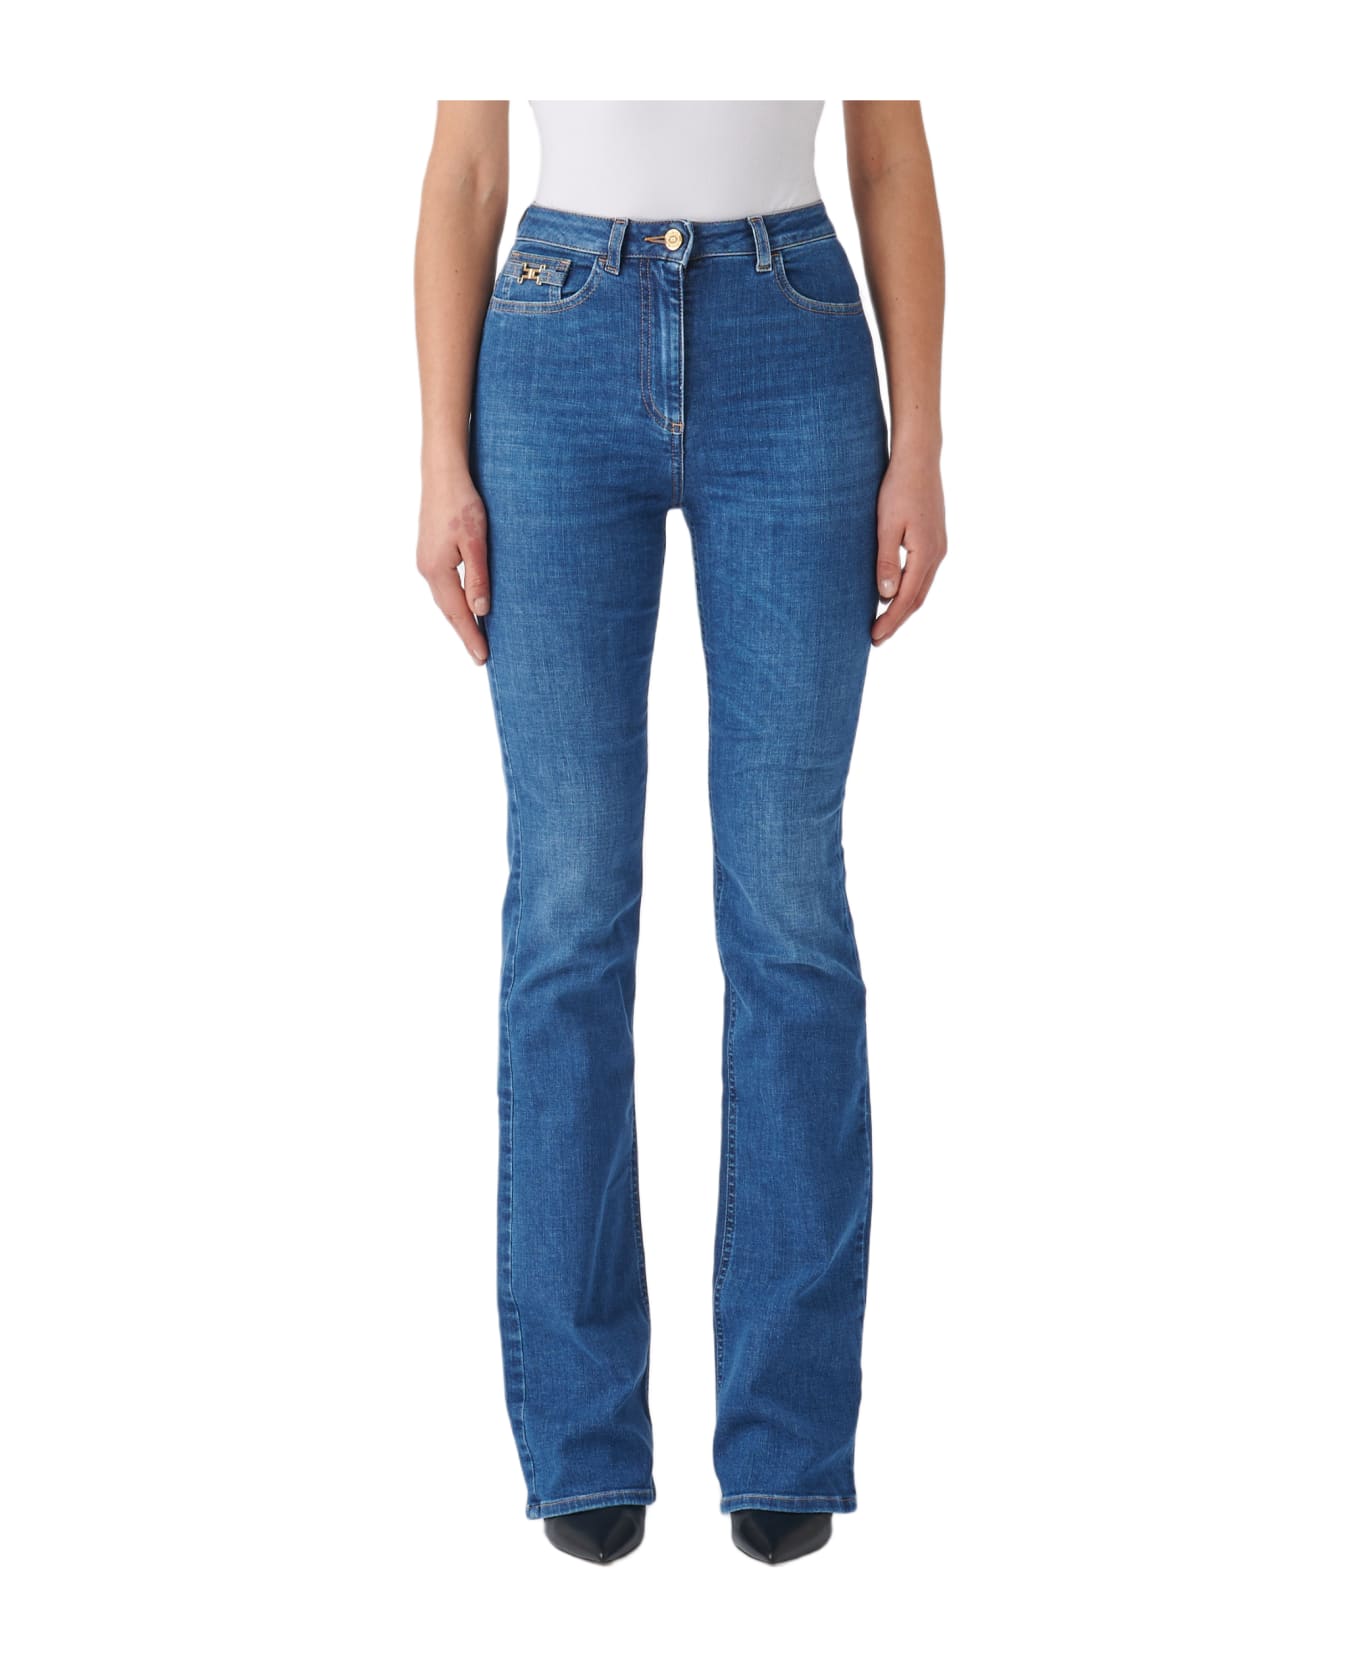 Elisabetta Franchi Cotton Jeans - DENIM BLU